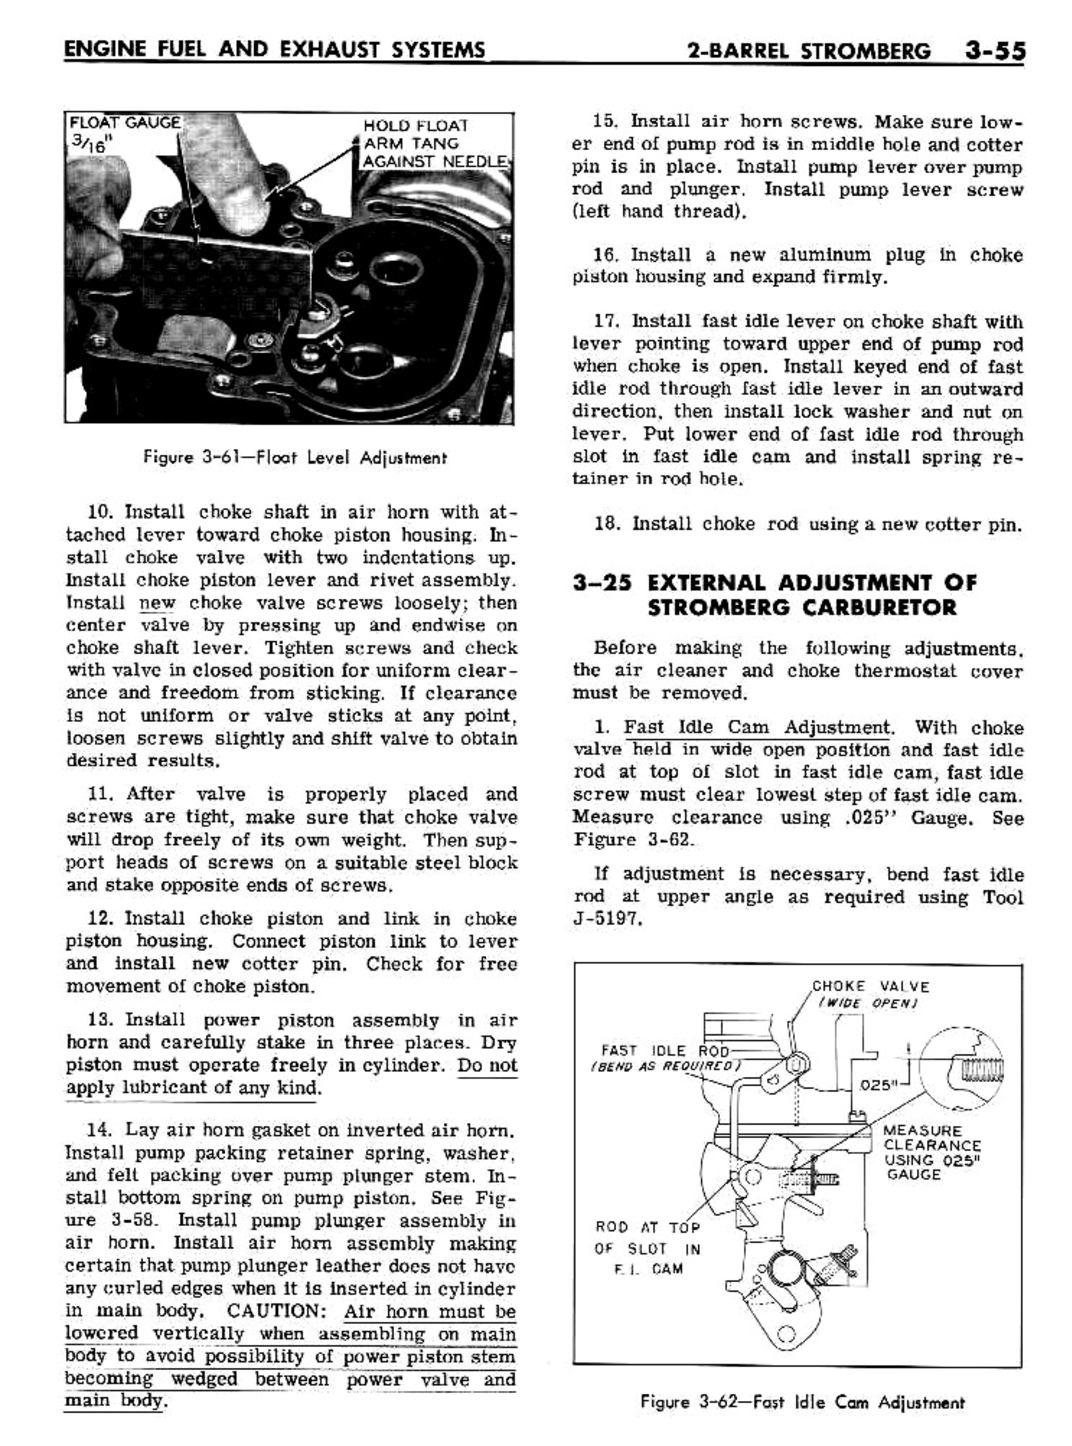 n_04 1961 Buick Shop Manual - Engine Fuel & Exhaust-055-055.jpg